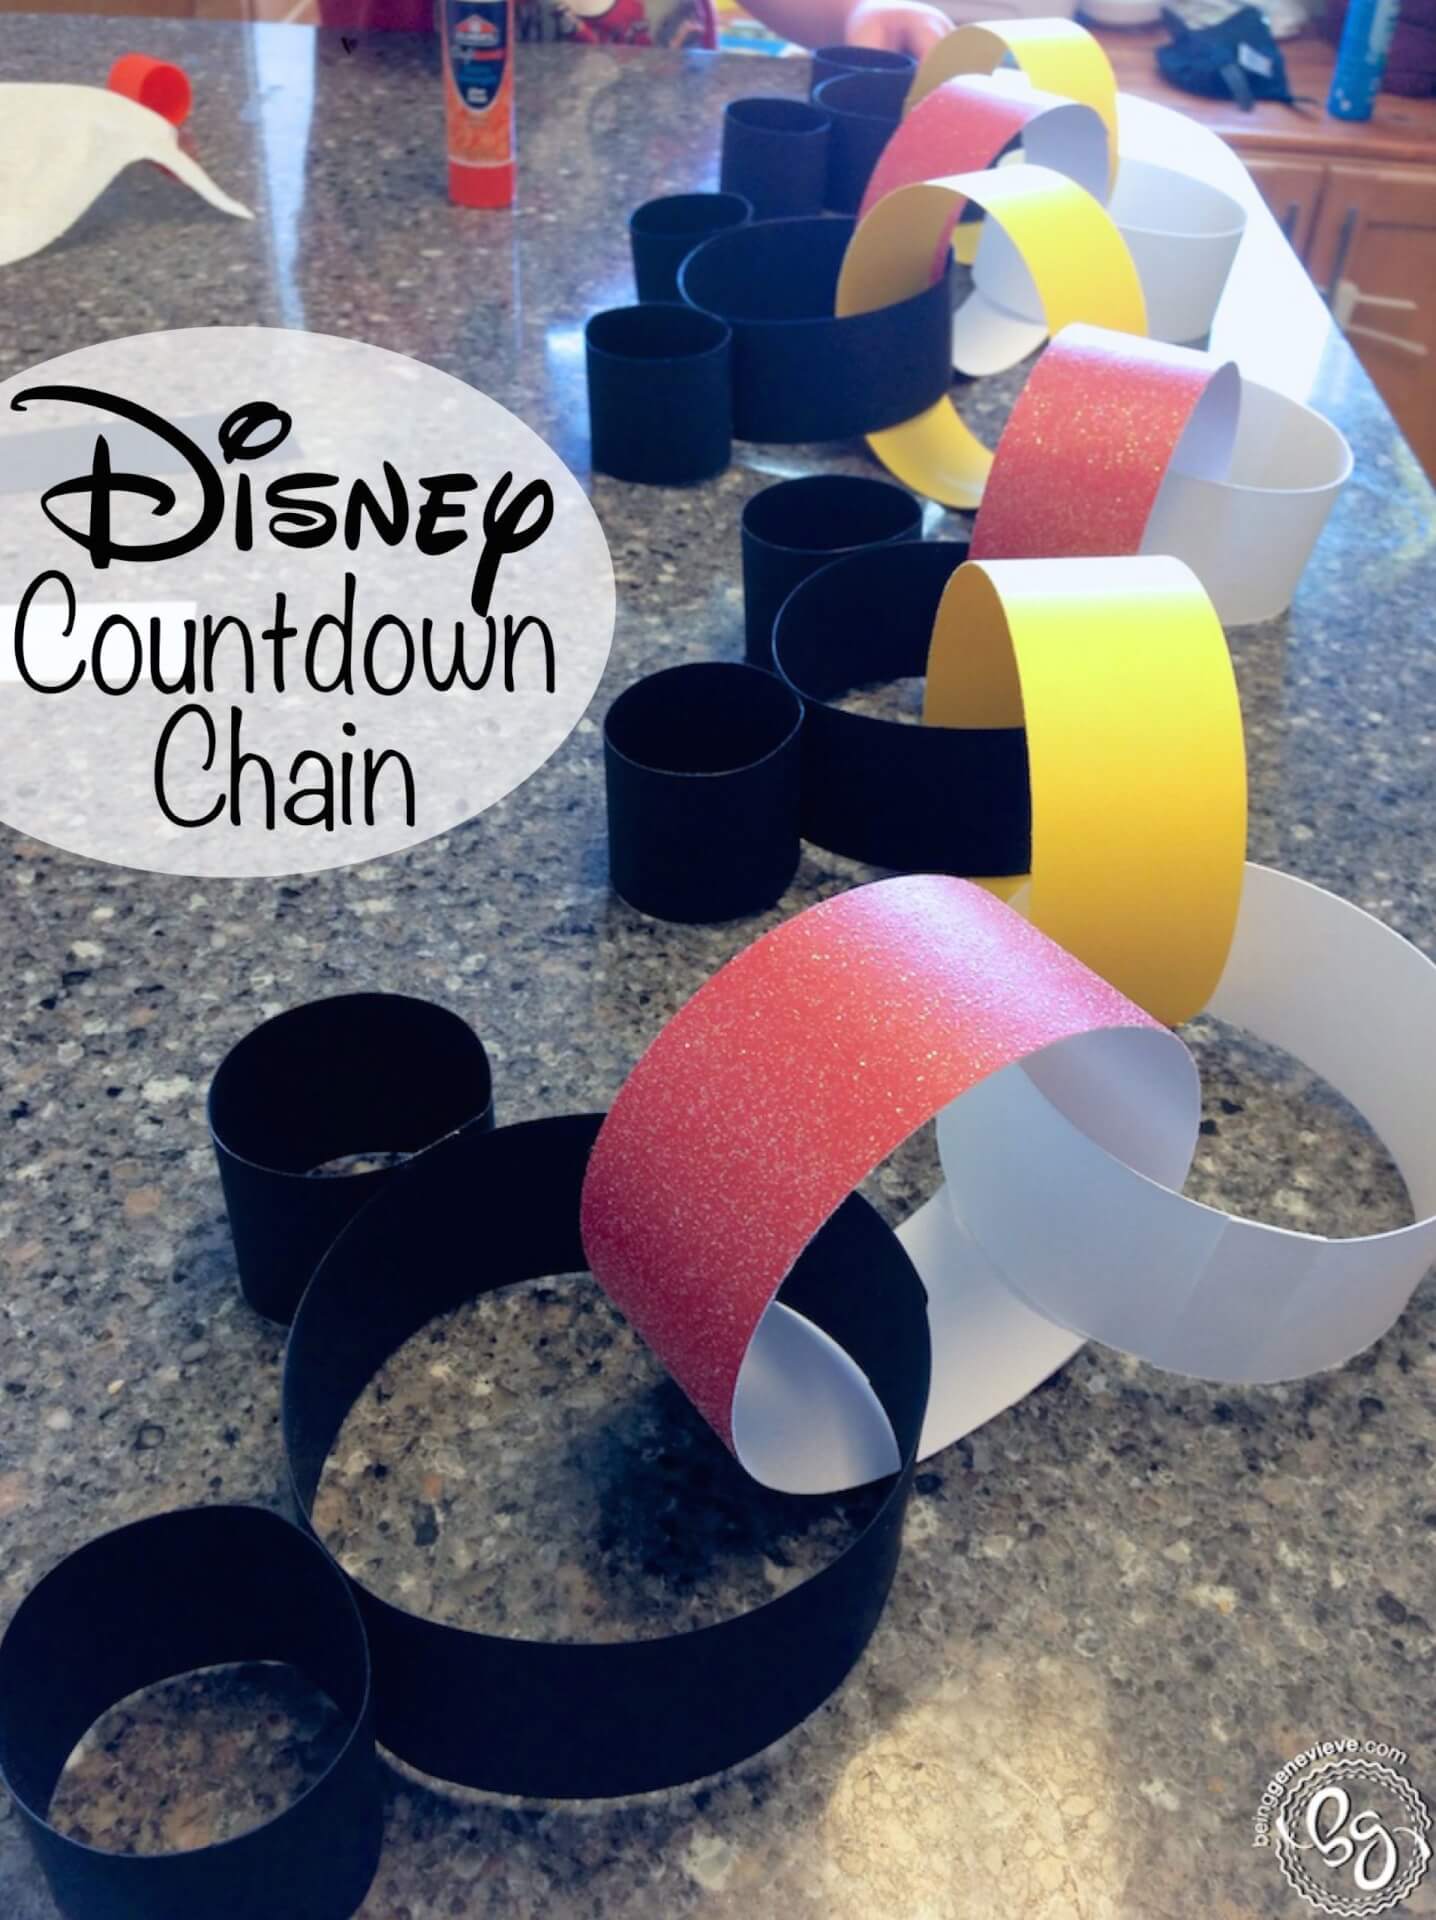 Disney Countdown Chain